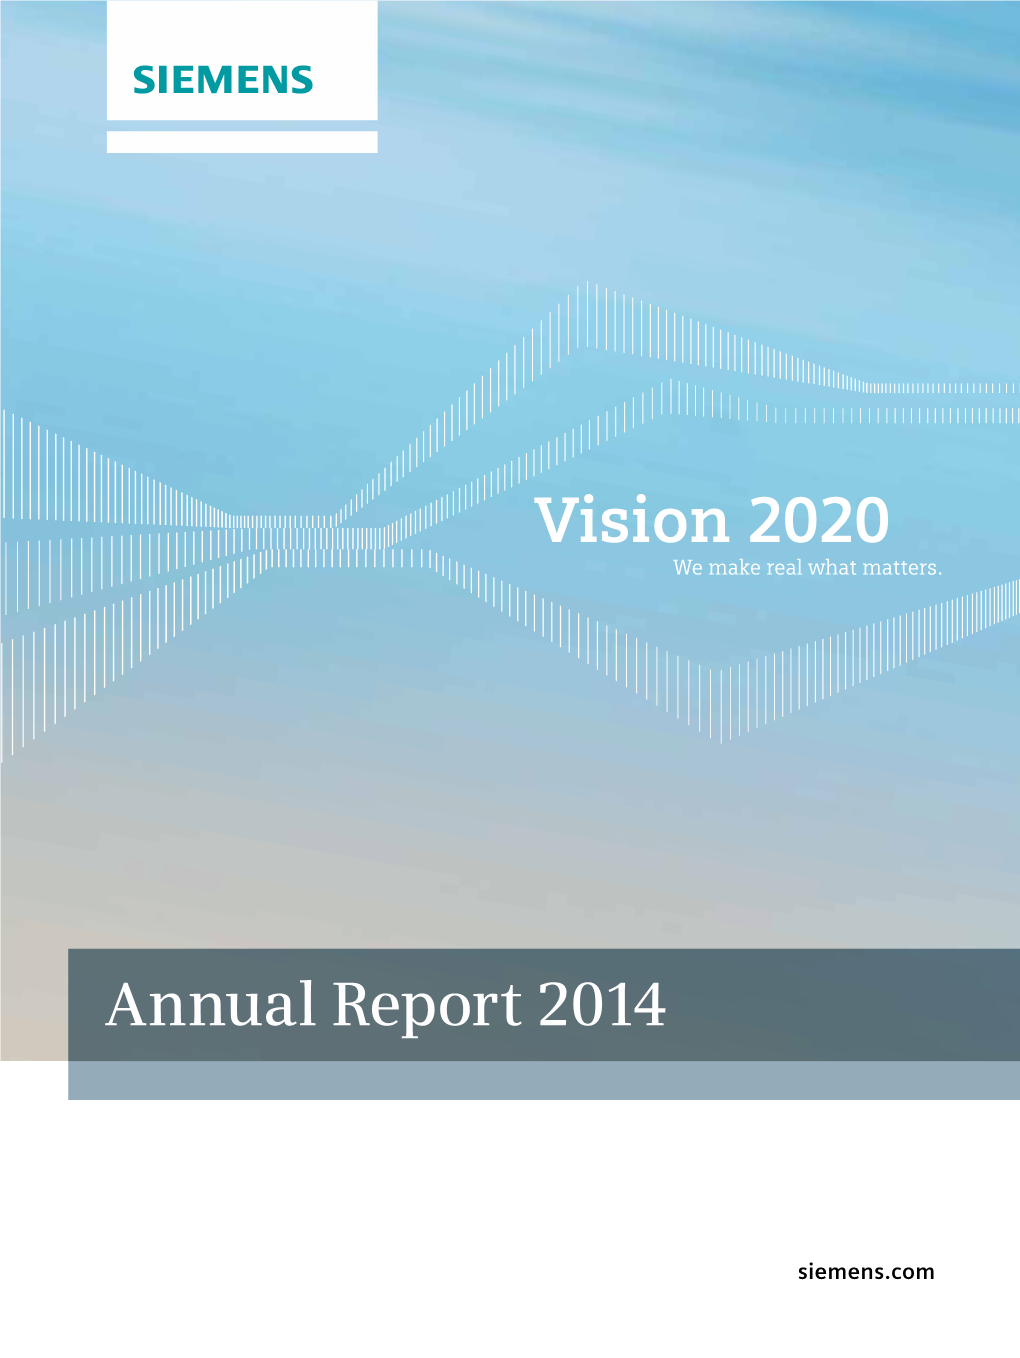 Siemens Annual Report 2014